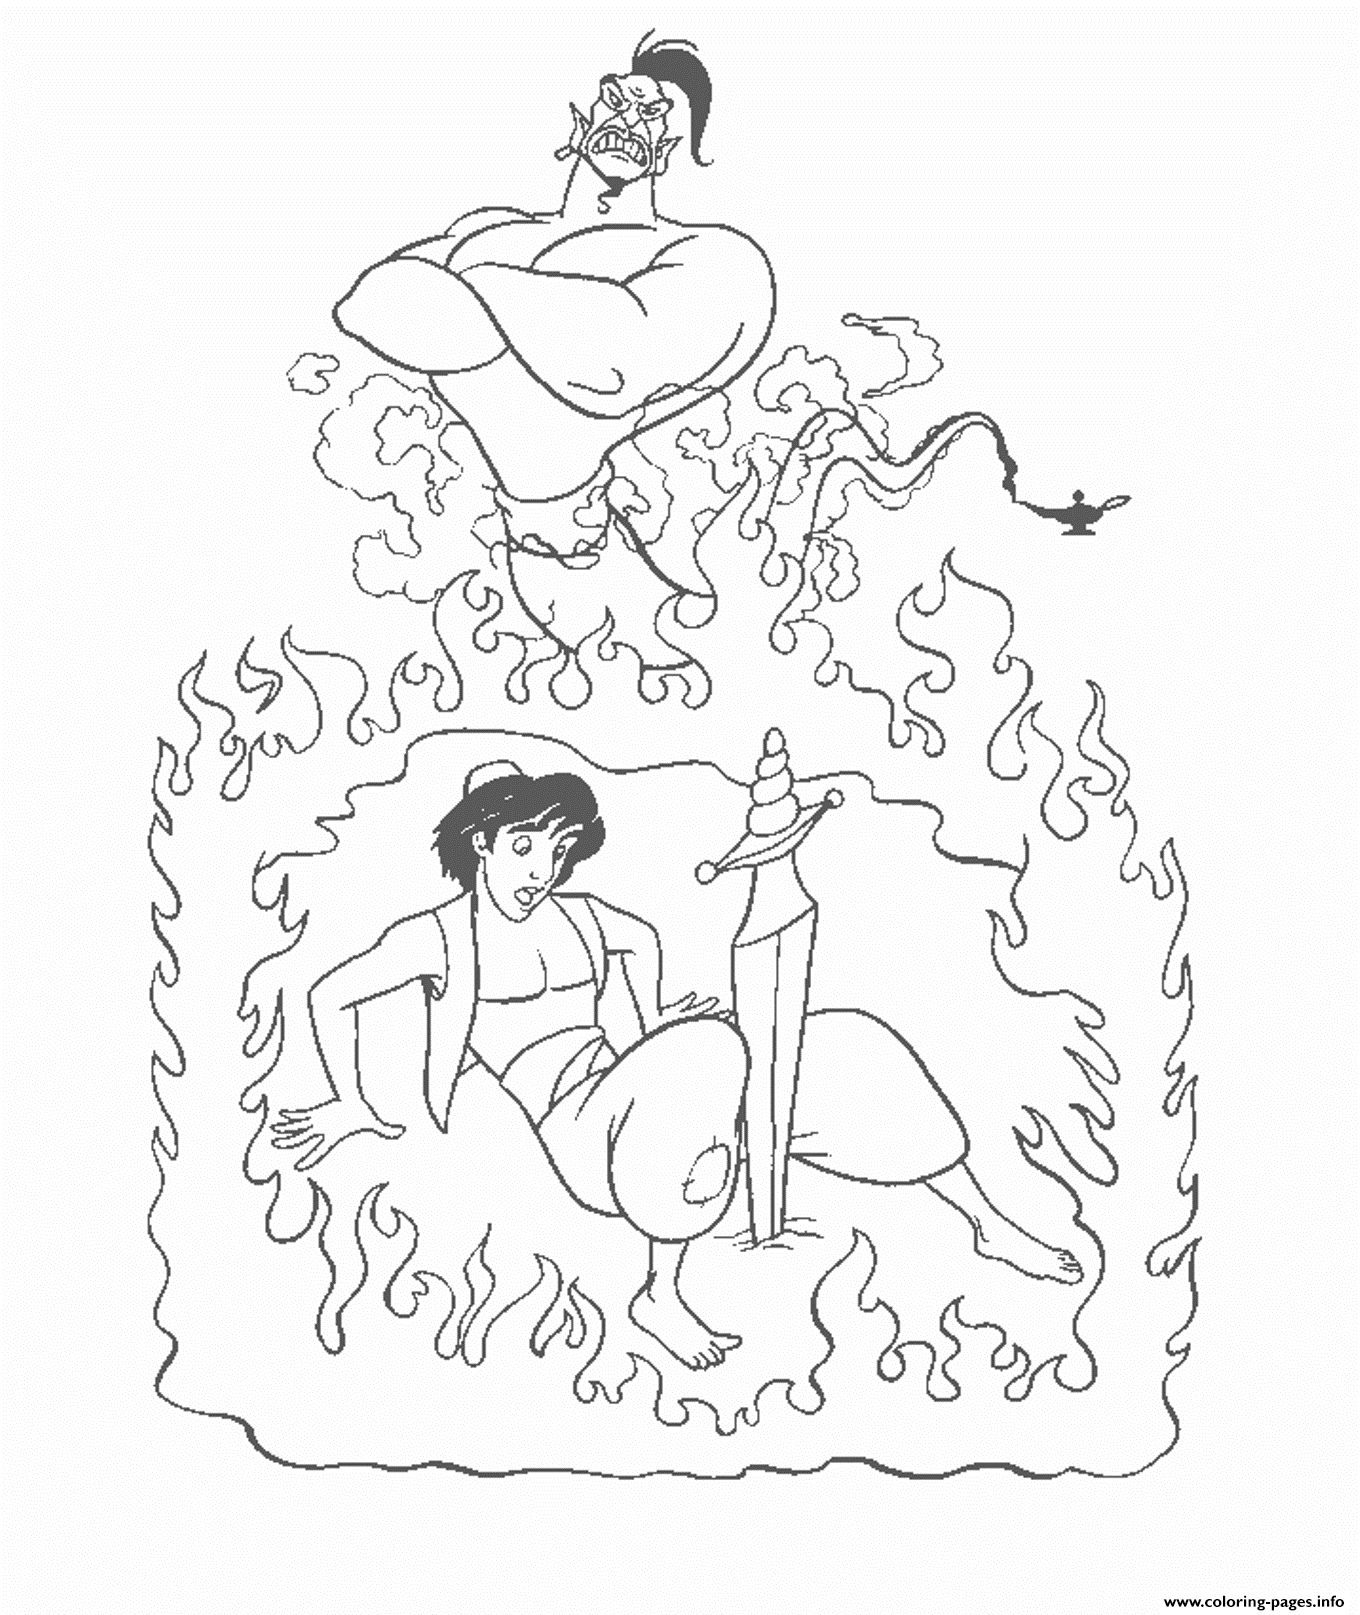 Genie And Aladdin  Cartoon Disney6904 coloring